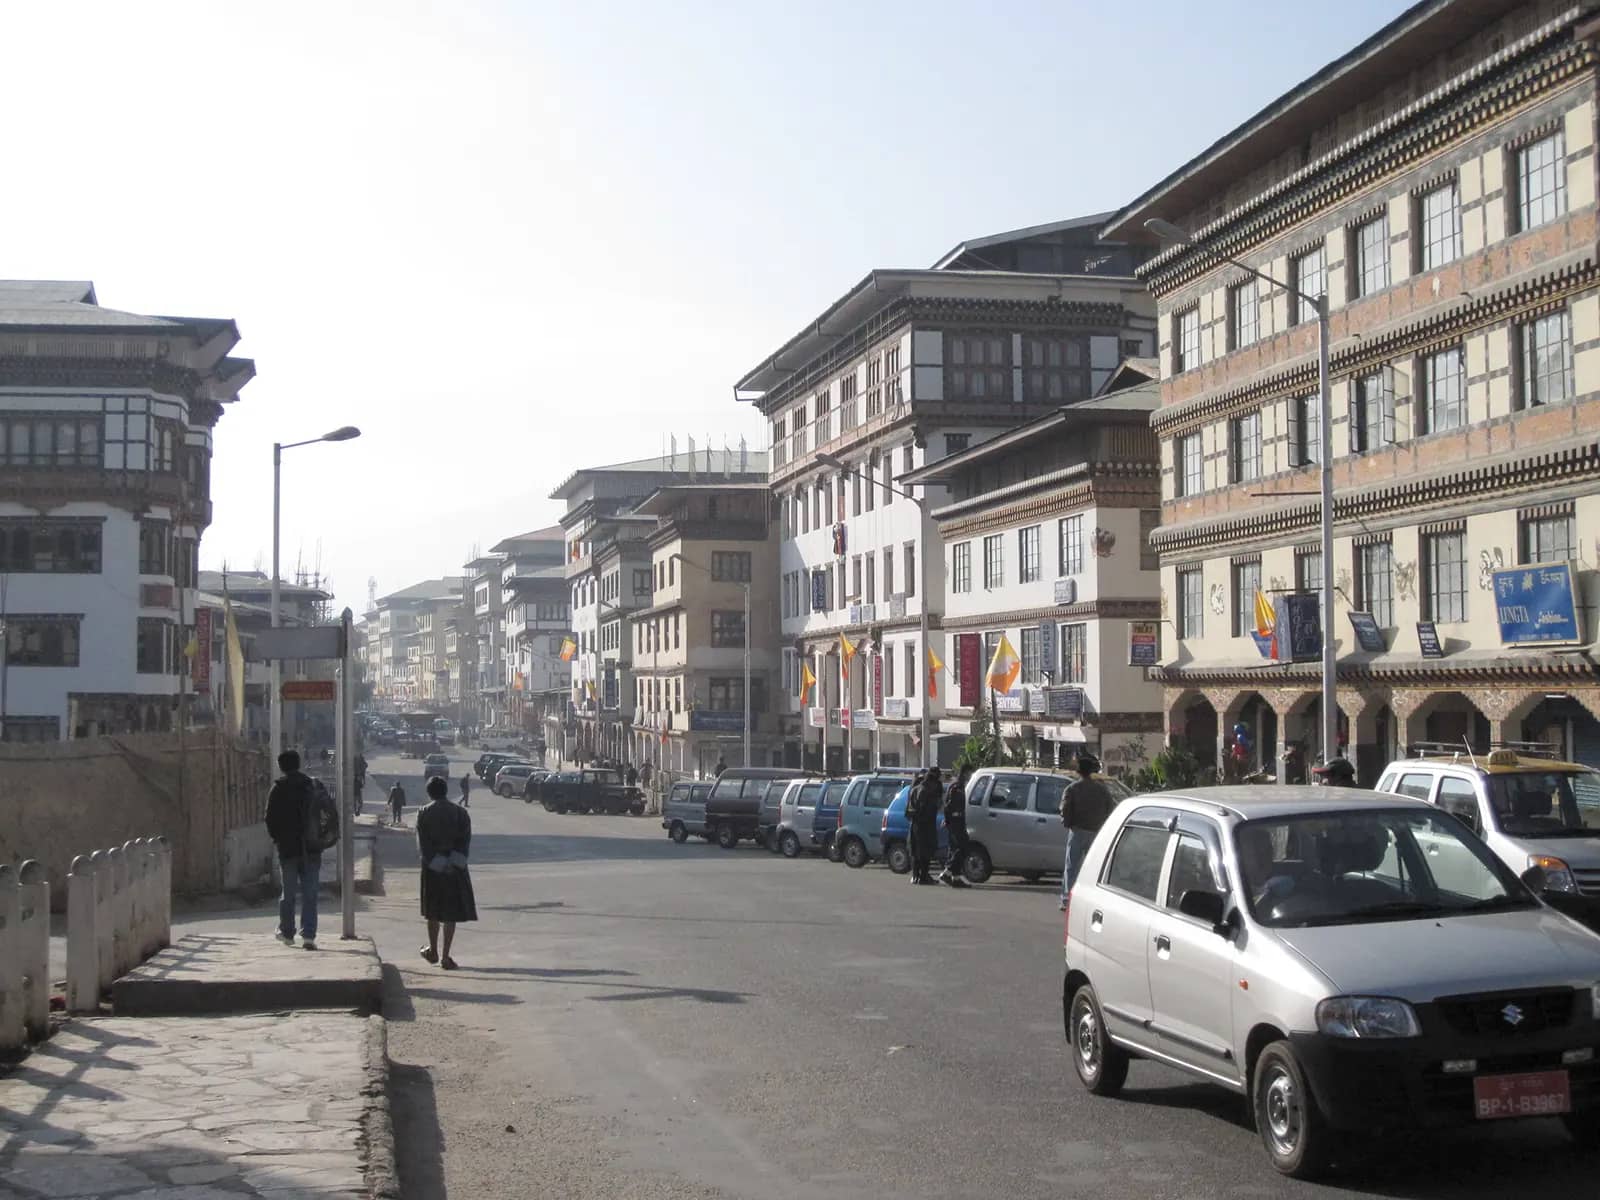 The Main Street of Bhutan